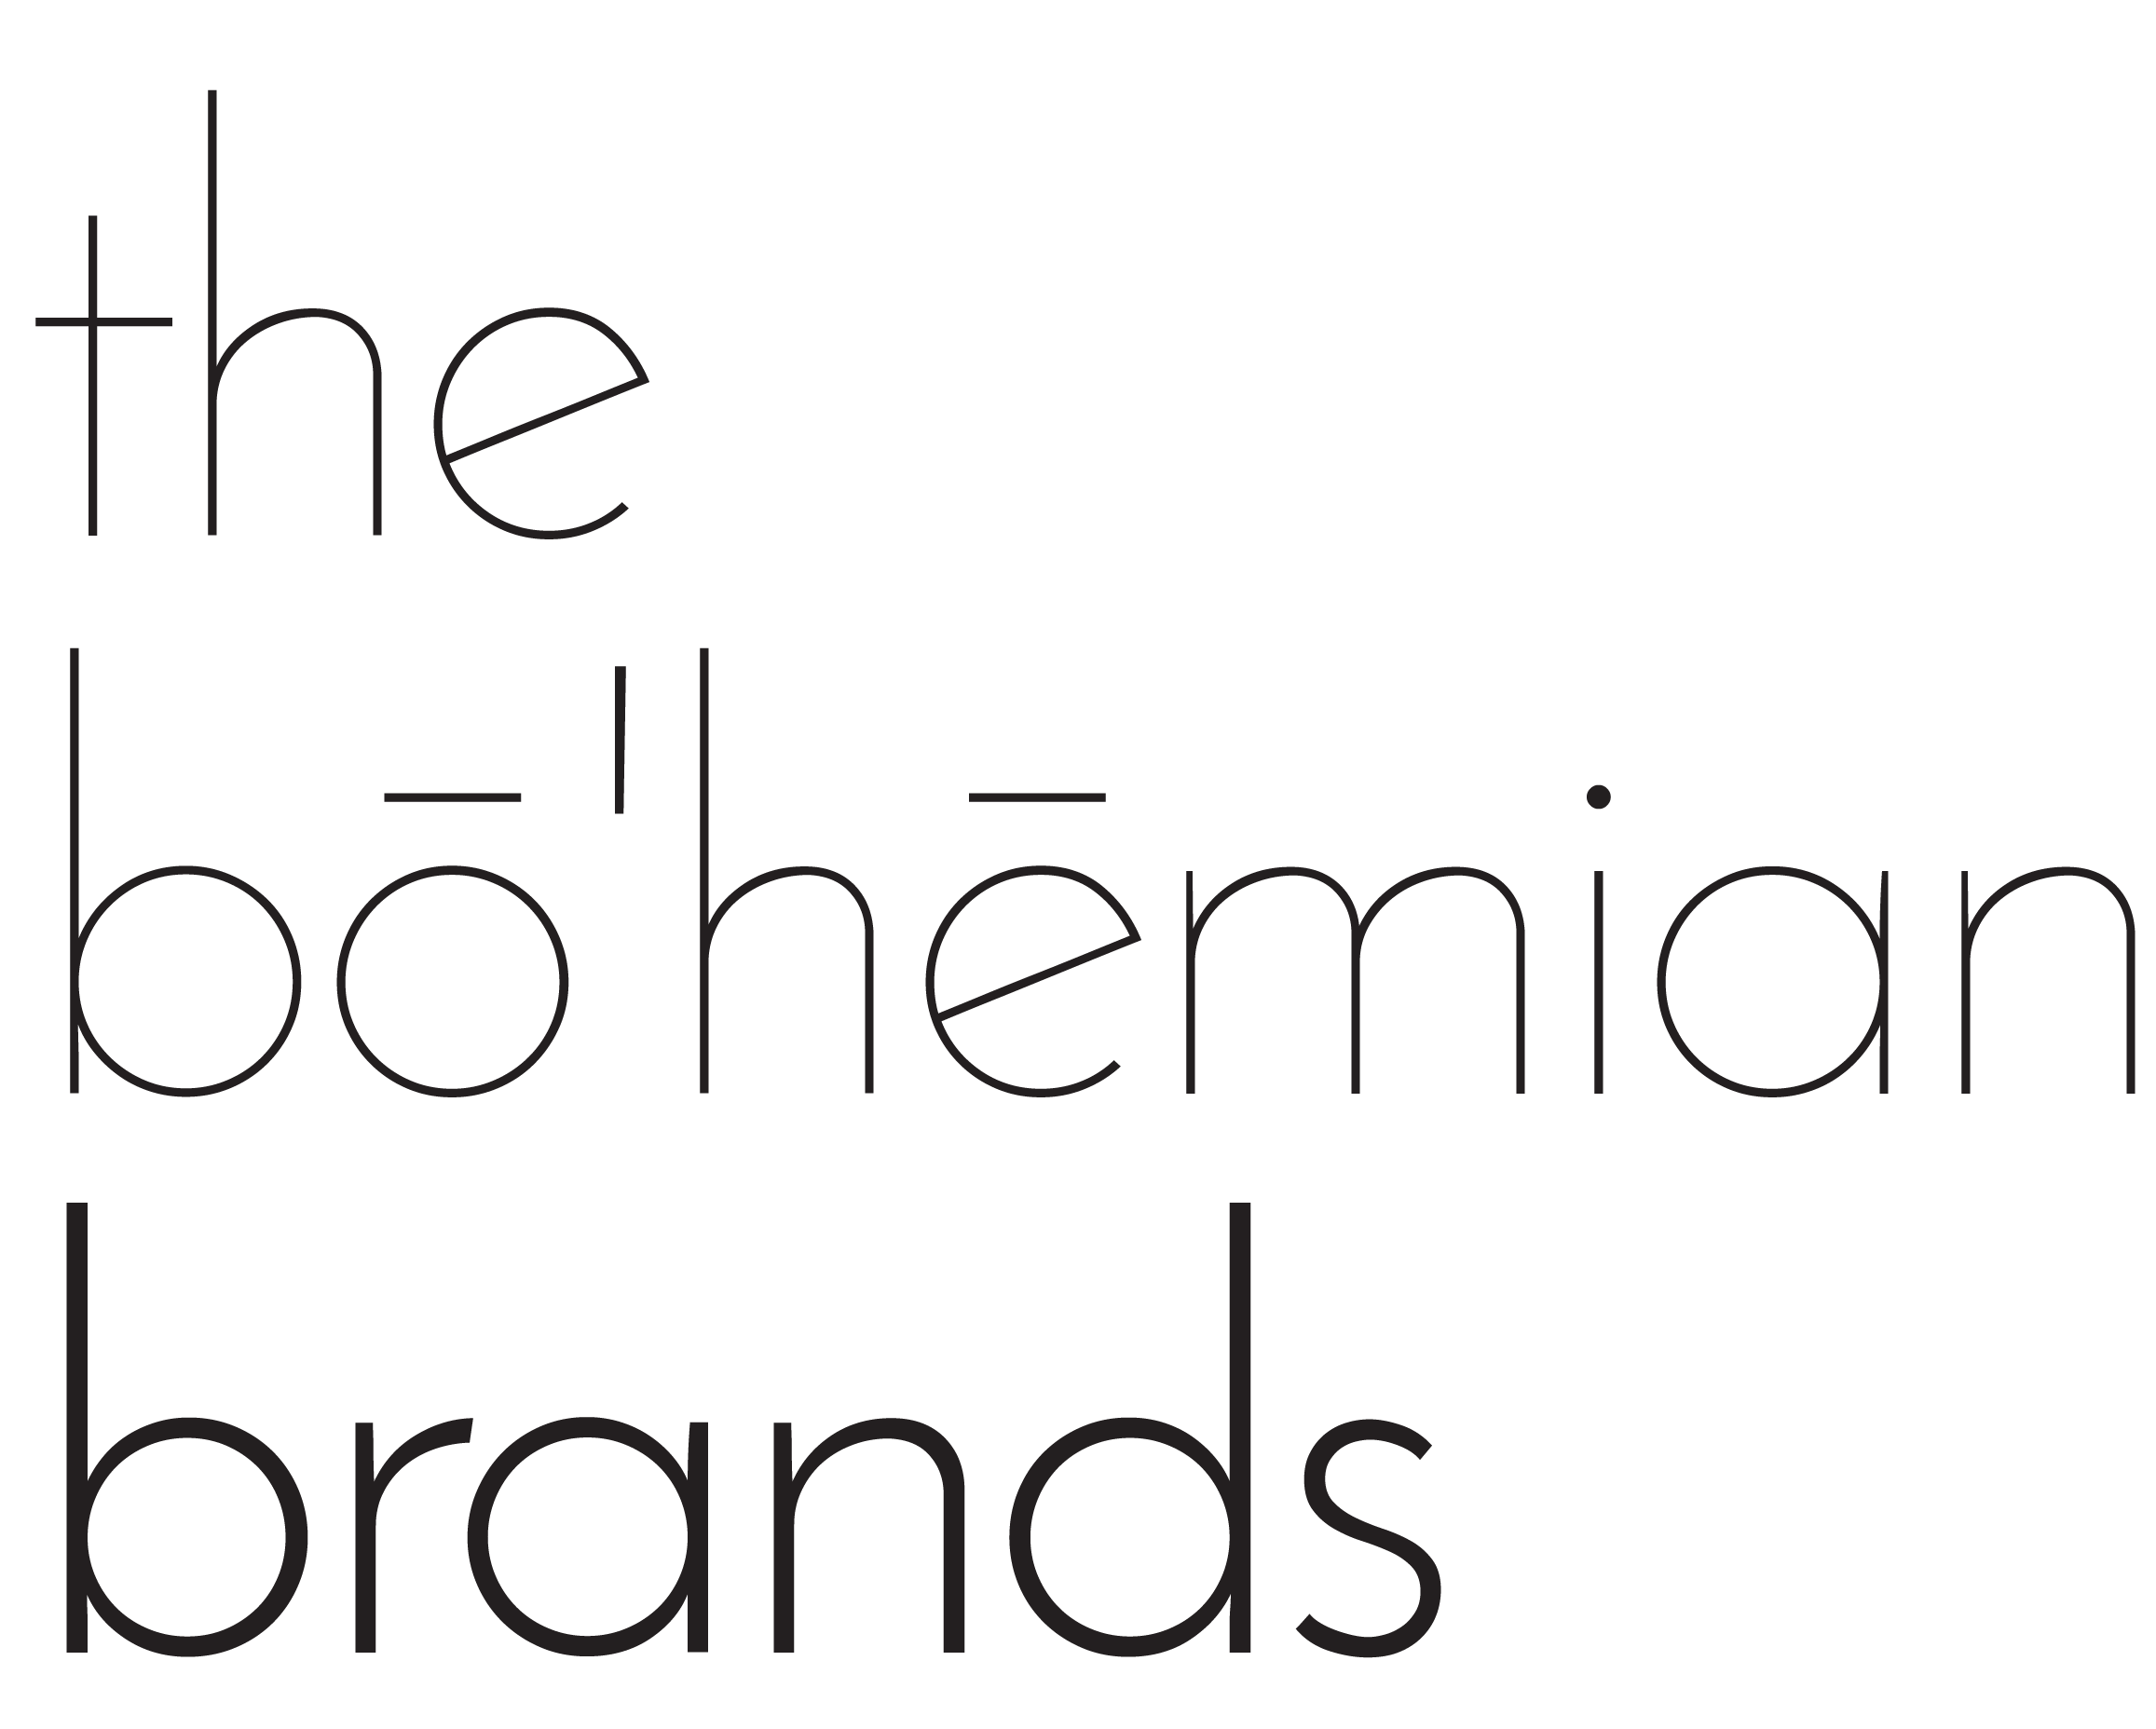 the bohemian brands